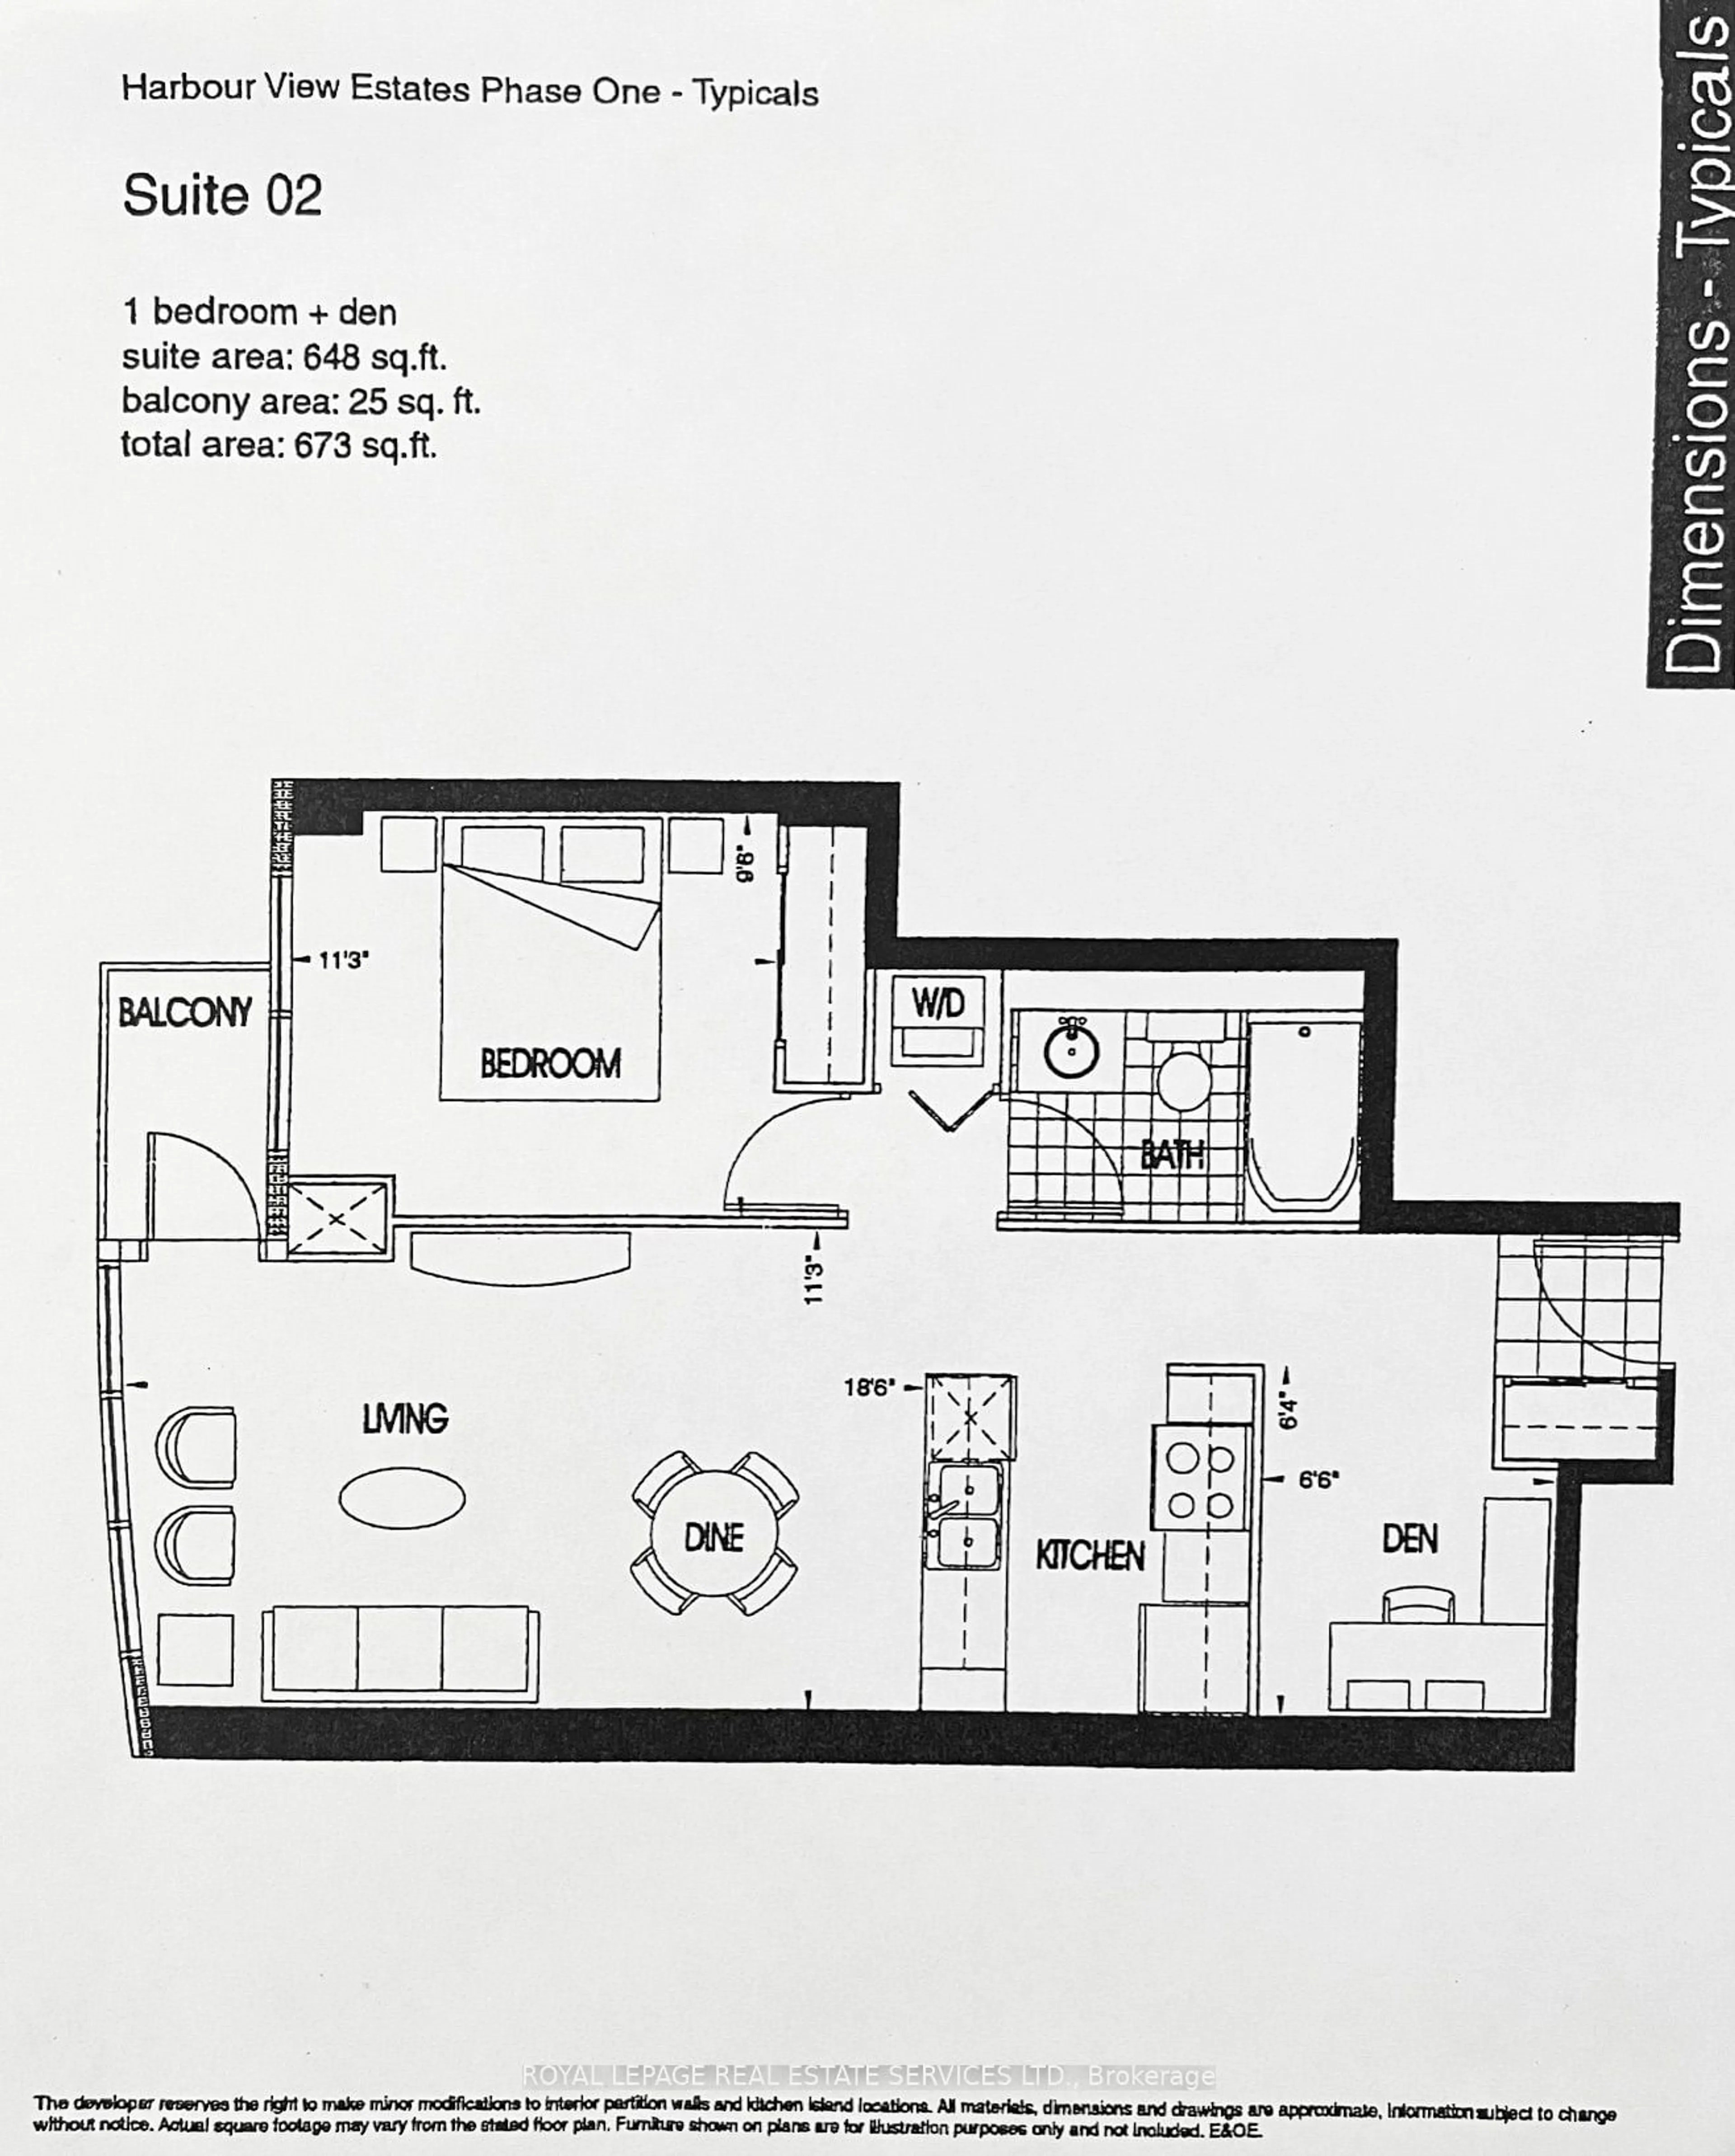 Floor plan for 35 Mariner Terr #3802, Toronto Ontario M5V 3V9